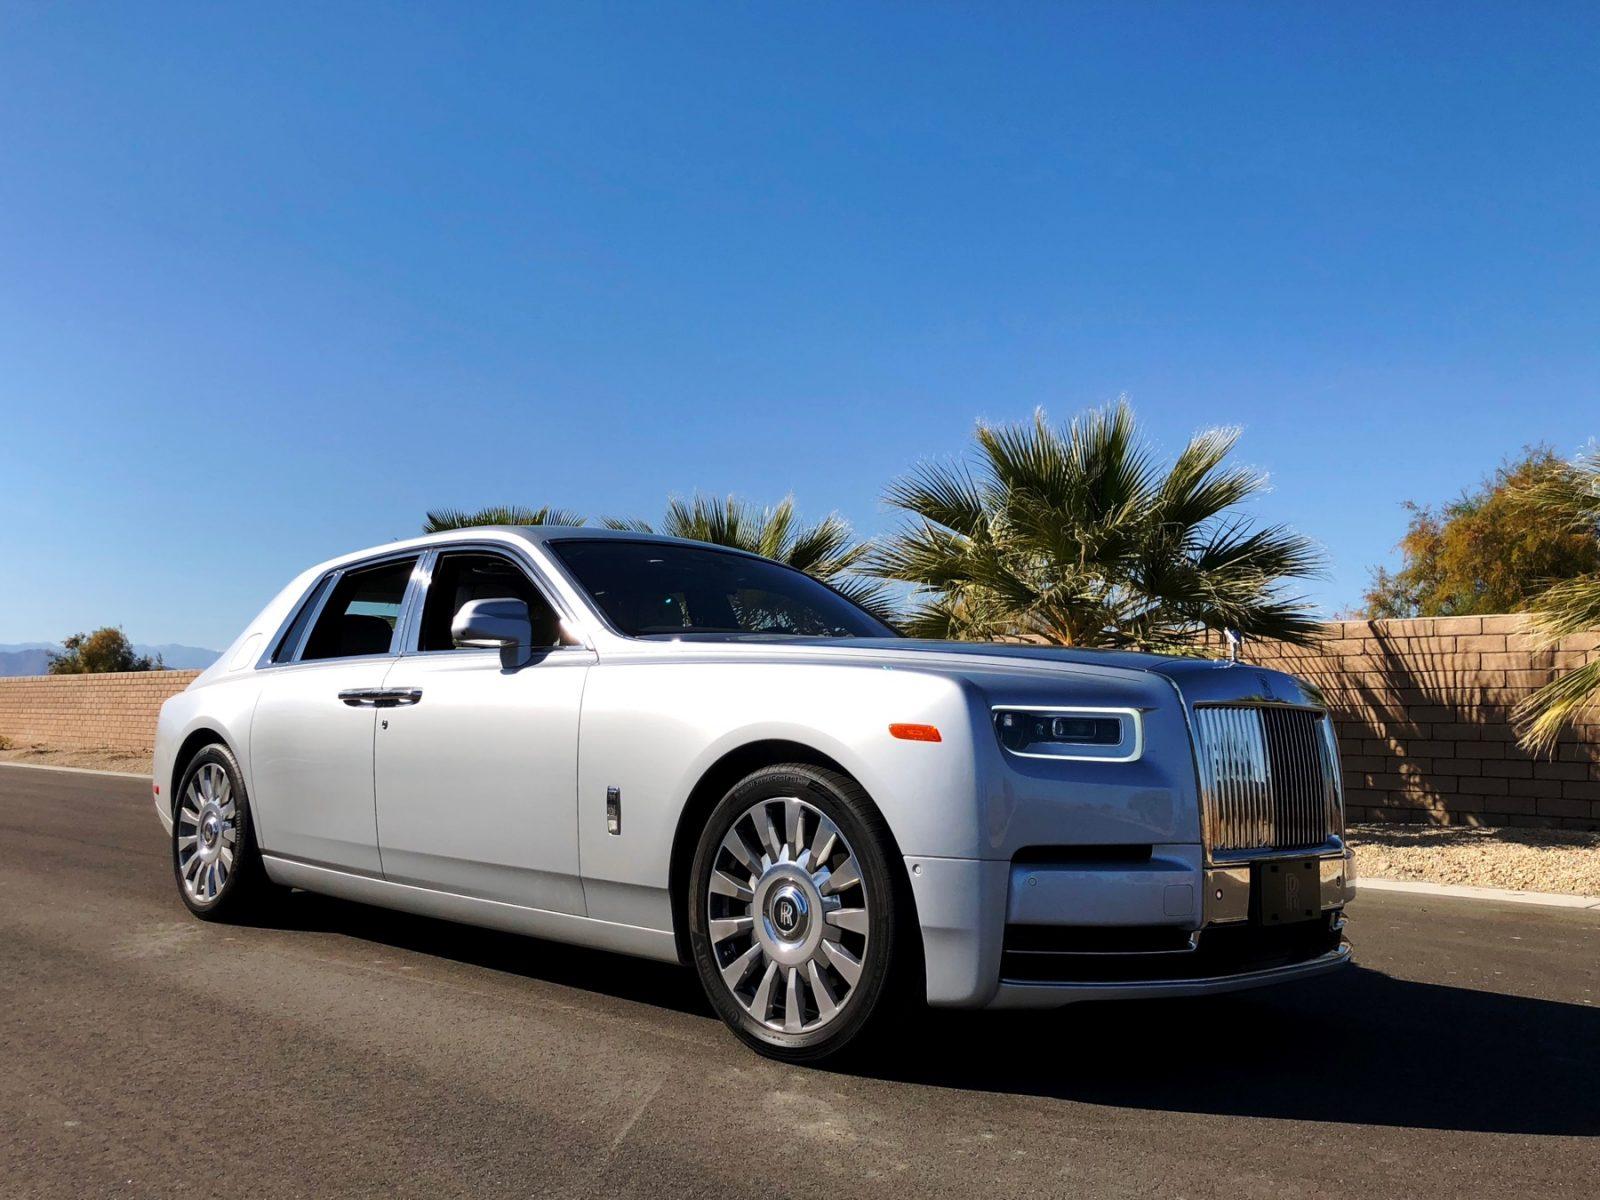 Review: 2019 Rolls Royce Phantom World's Best Car